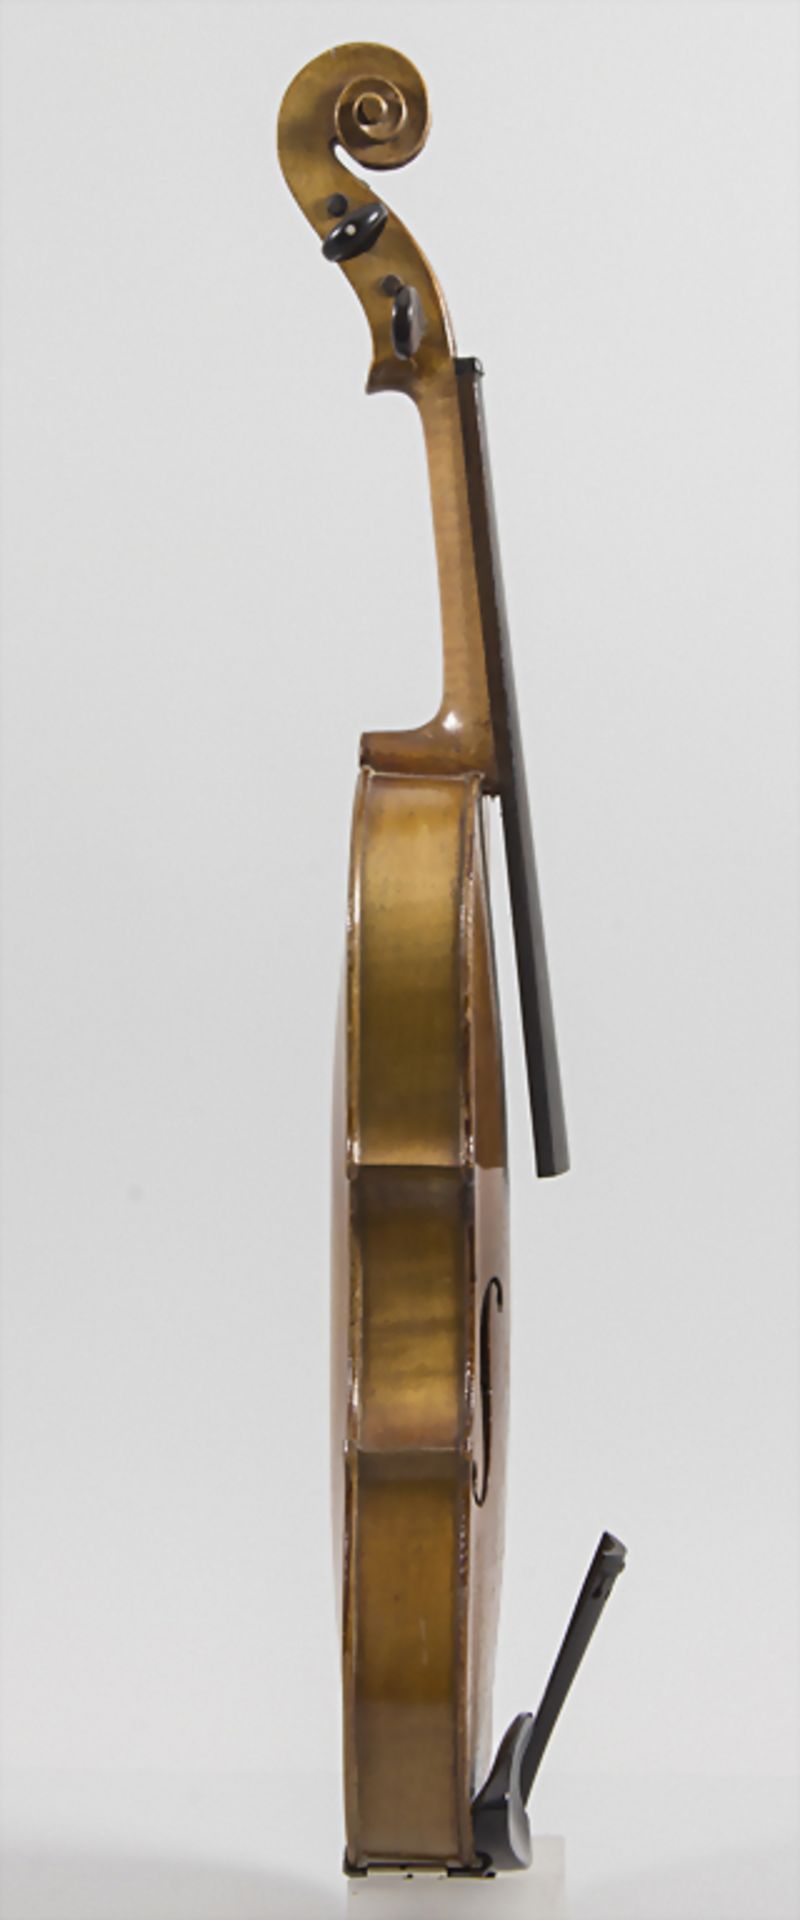 Violine / A violin, Modell 'Stradivari', Frankreich, um 1920 - Bild 2 aus 5